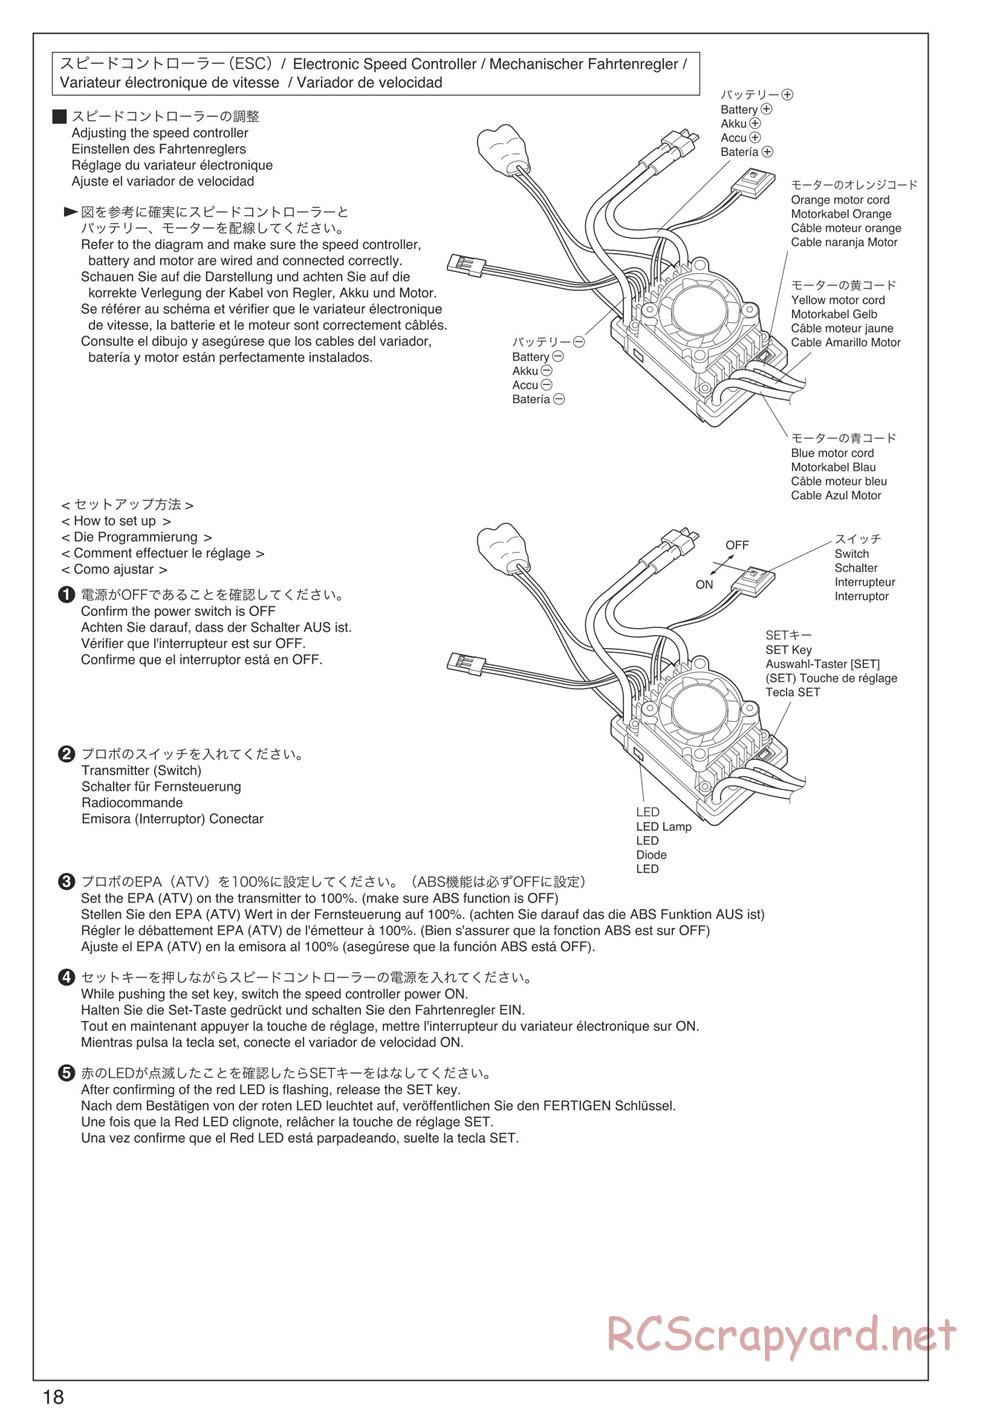 Kyosho - DMT VE-R - Manual - Page 18